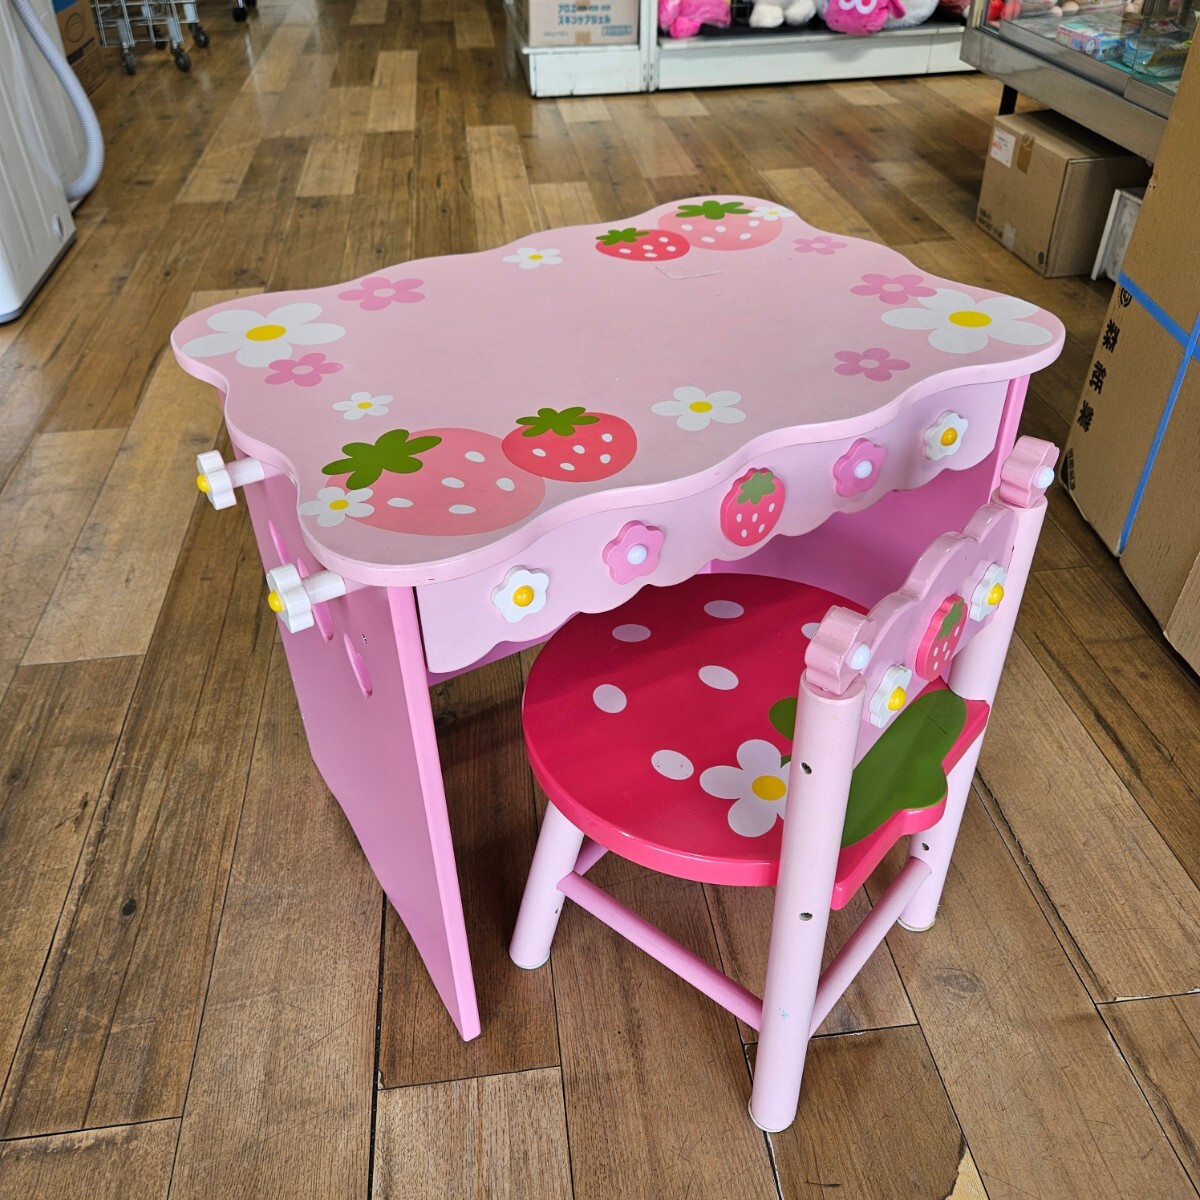  mother garden writing desk strawberry pattern desk chair set pink child desk used collection interior 